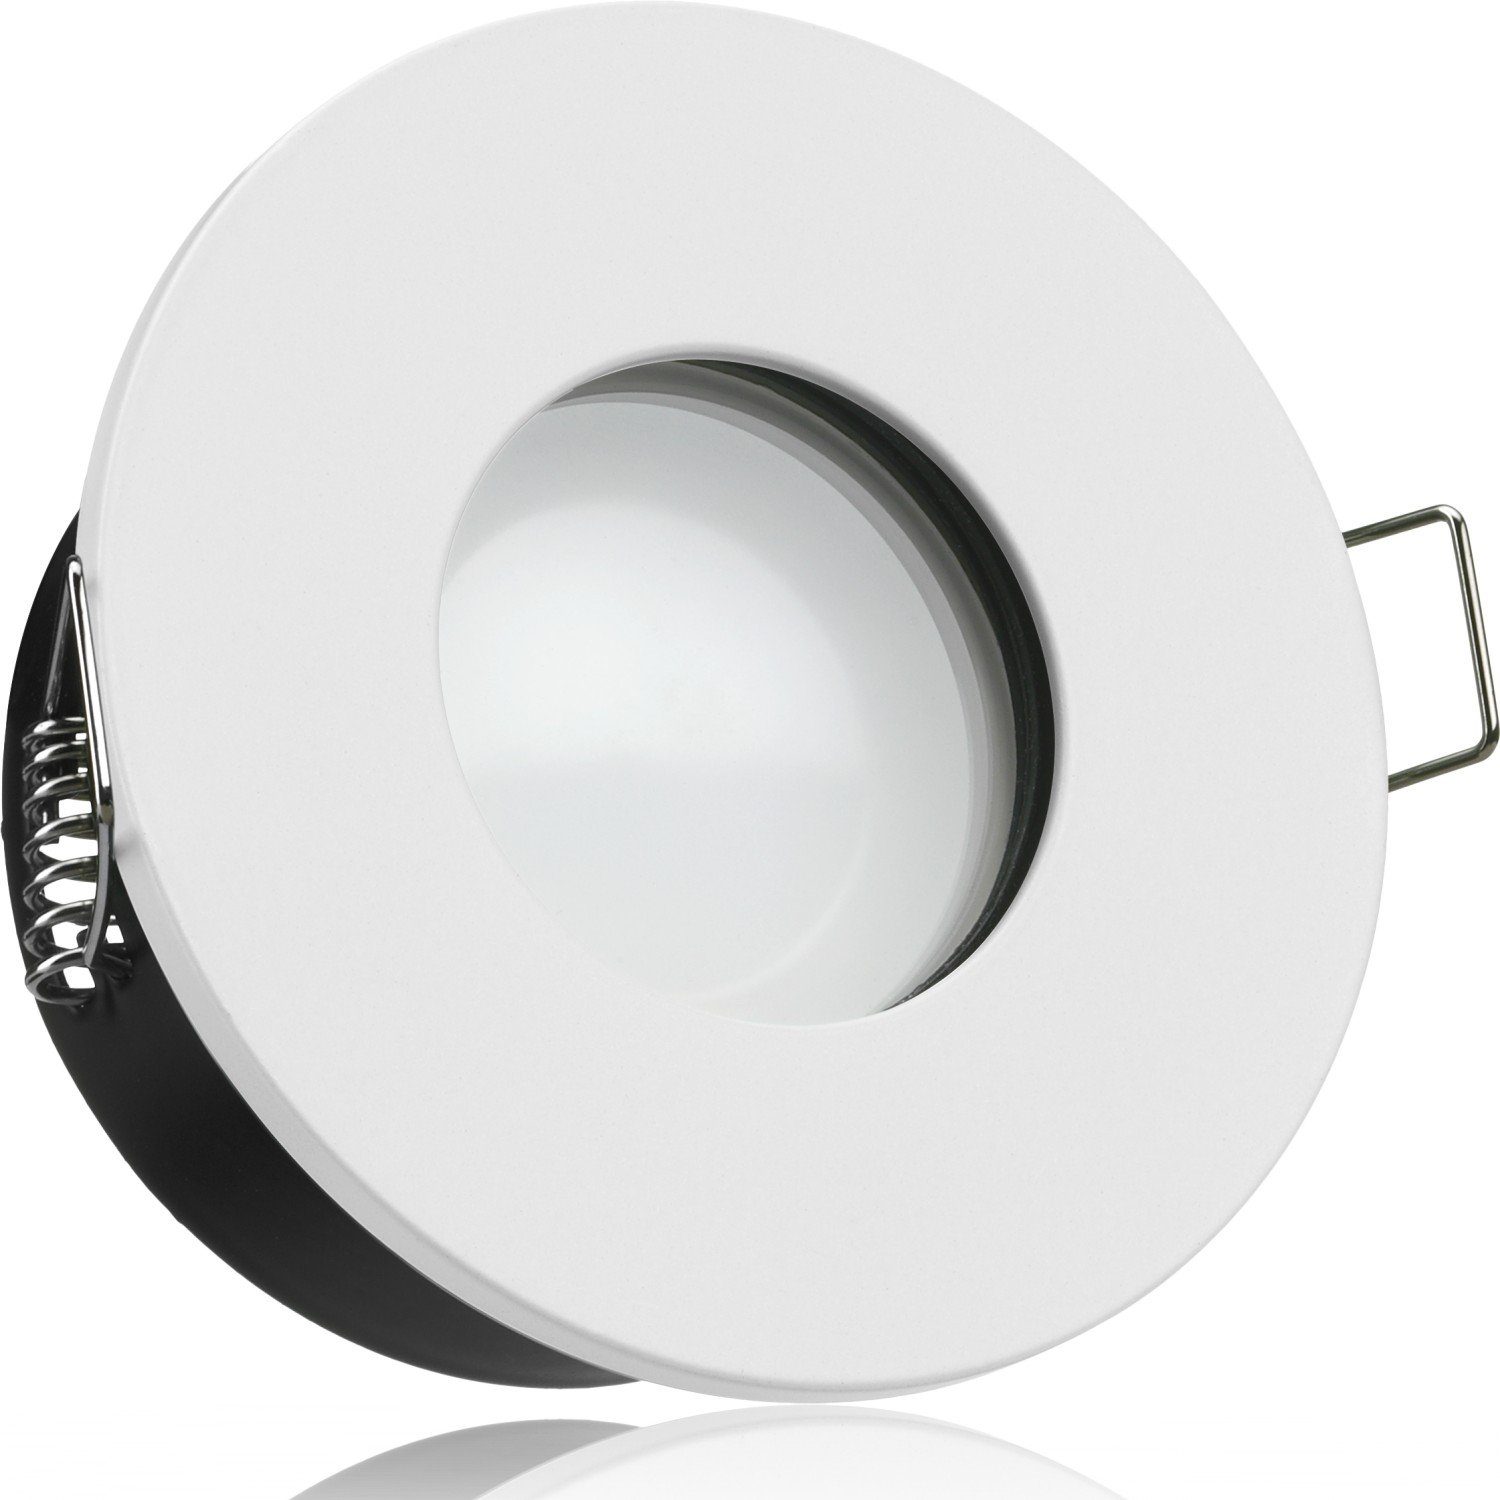 LEDANDO LED Einbaustrahler IP65 LED Einbaustrahler Set extra flach in weiß mit 5W Leuchtmittel vo